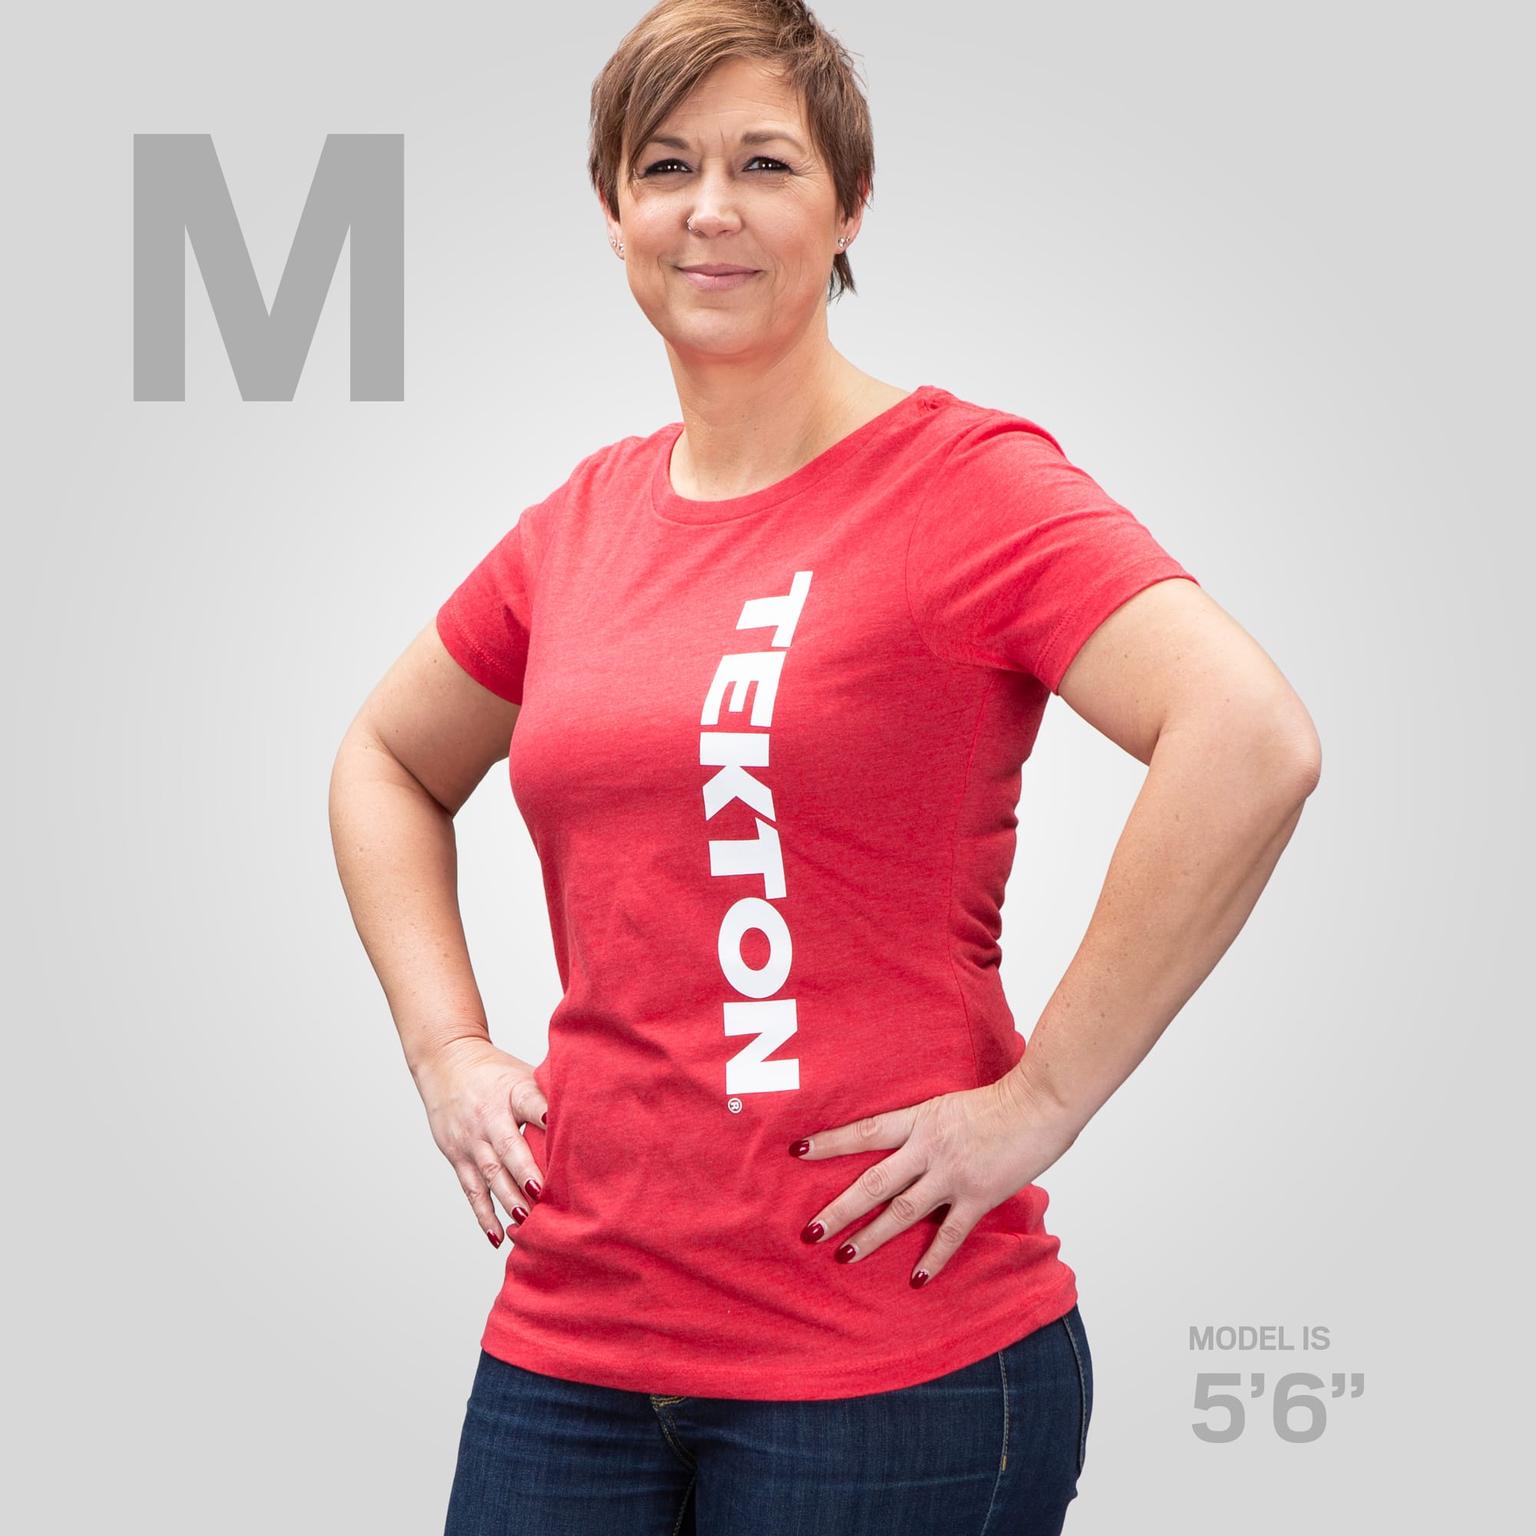 TEKTON APG32016 Tekton Women's T-Shirt, Red (M)